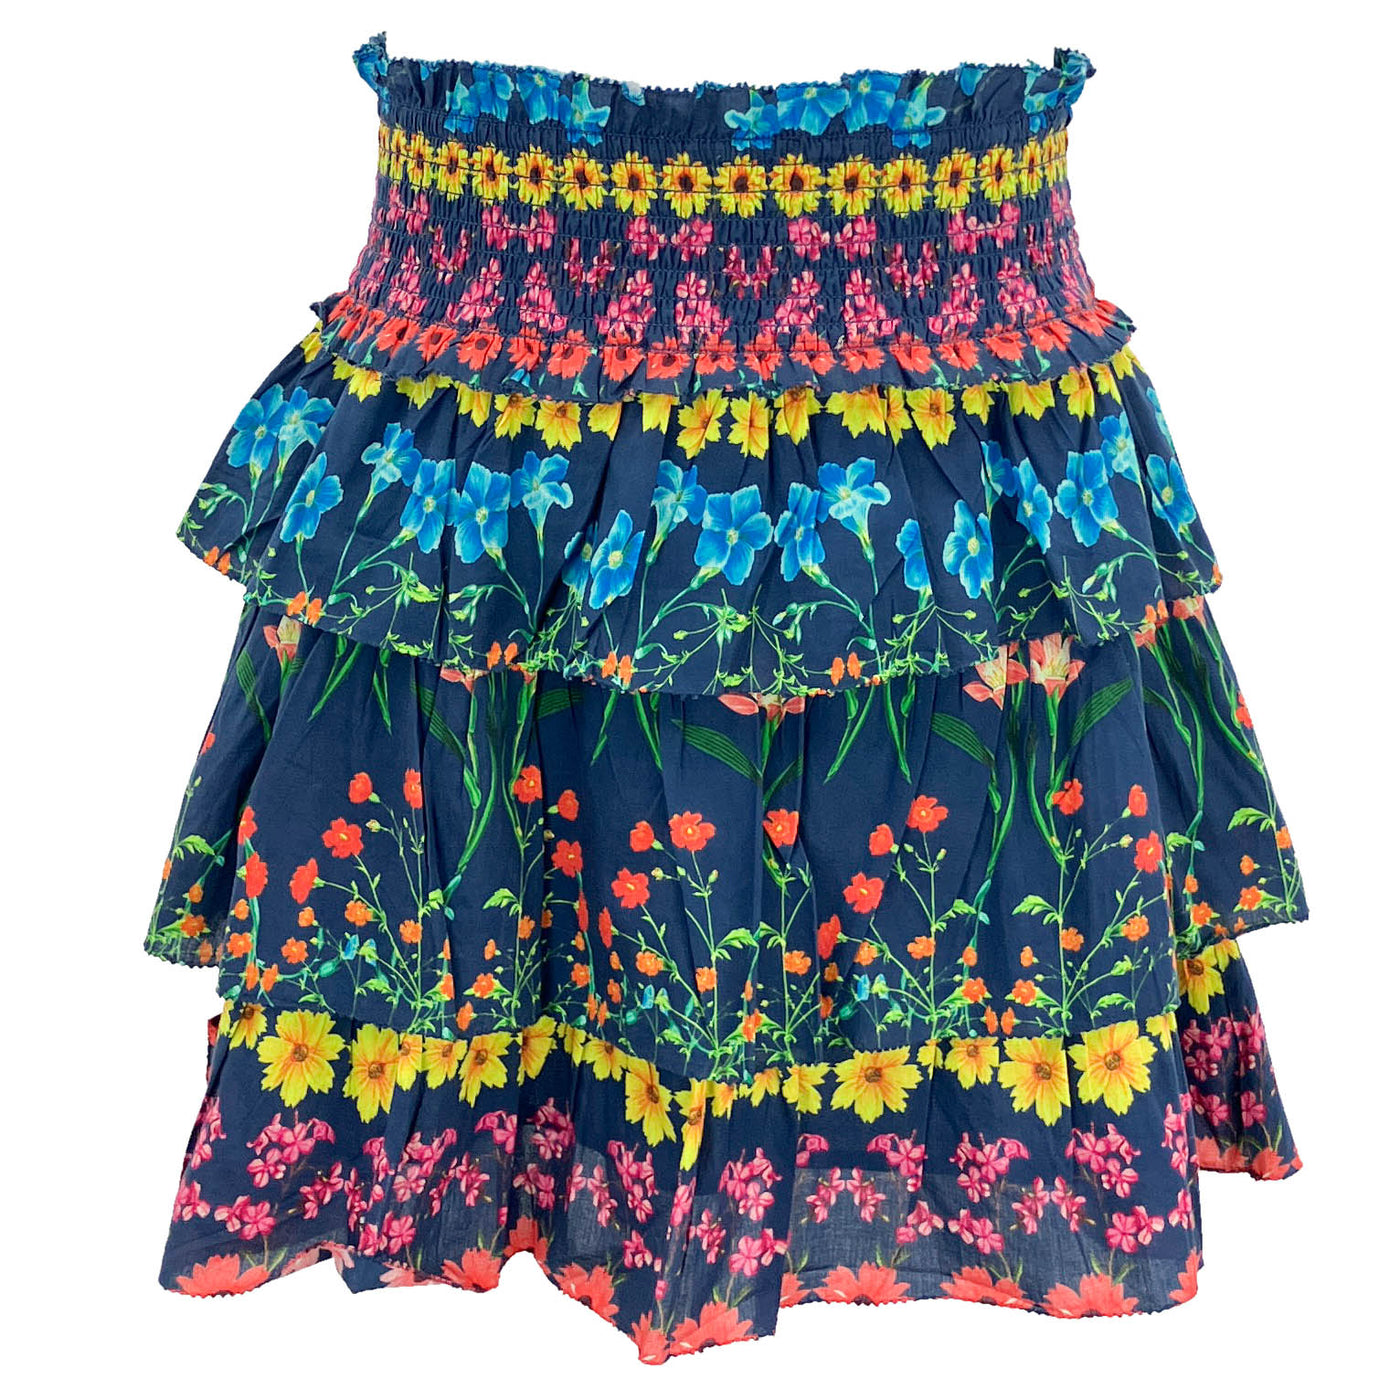 Cara Cara Lindsey Mini Skirt in Flowerbox Navy - Discounts on Cara Cara at UAL